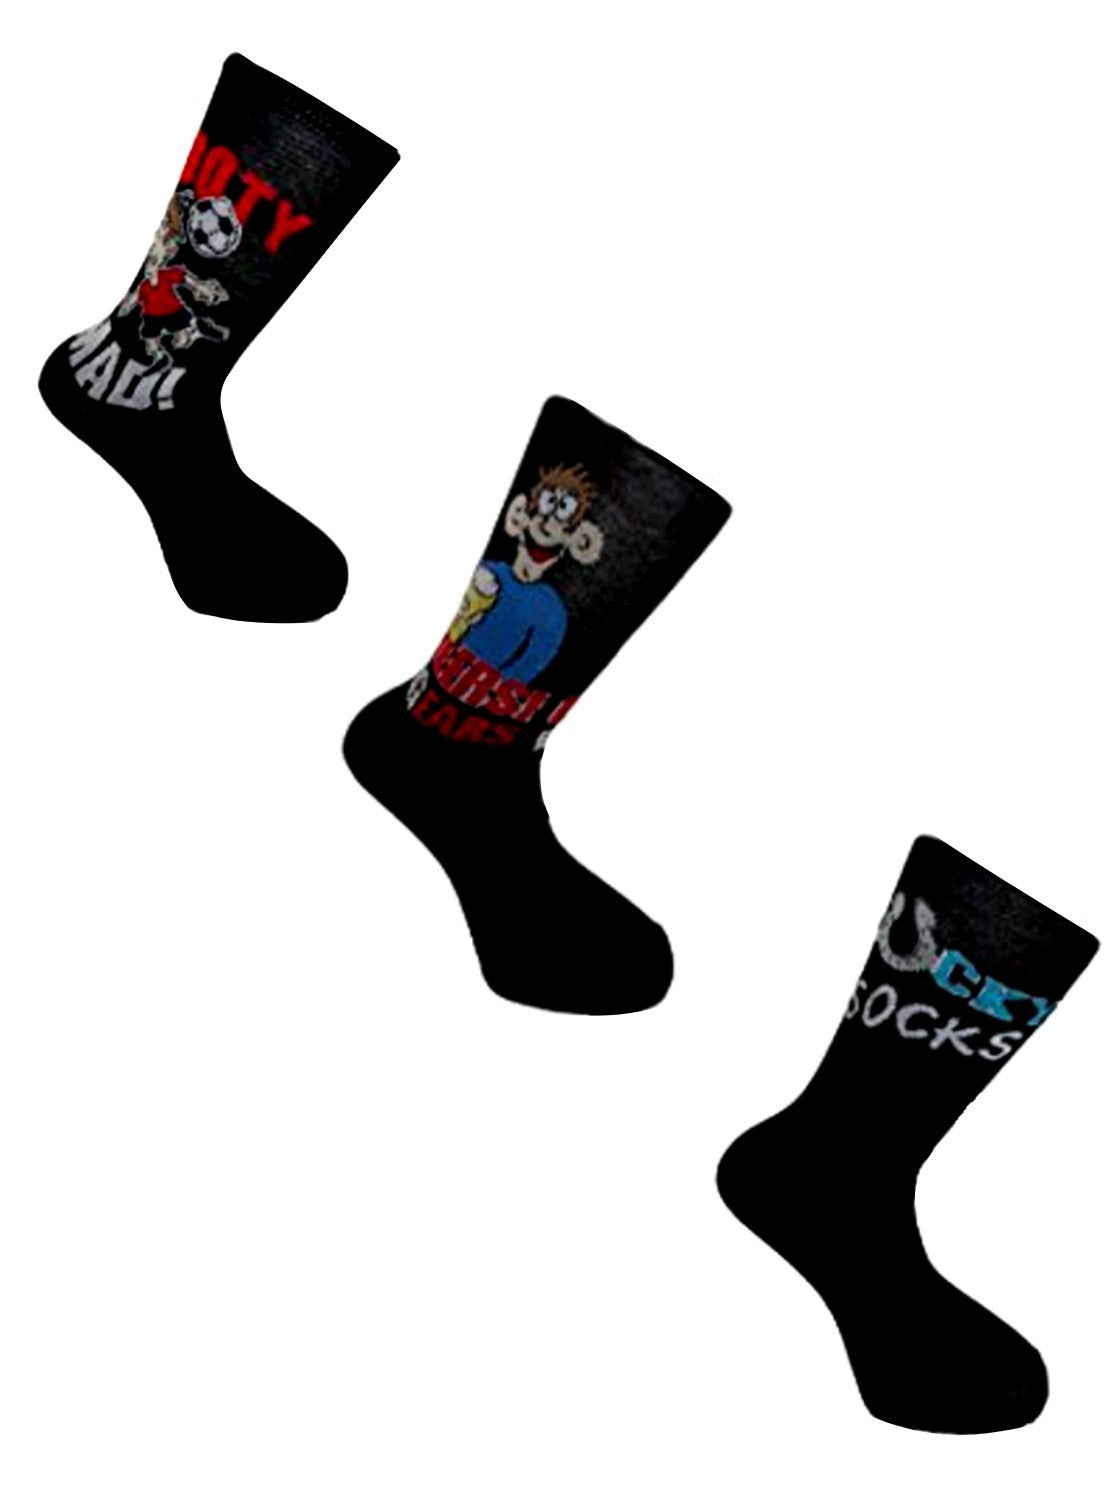 12 Pair’s Men's Novelty Fun Socks size 6-11